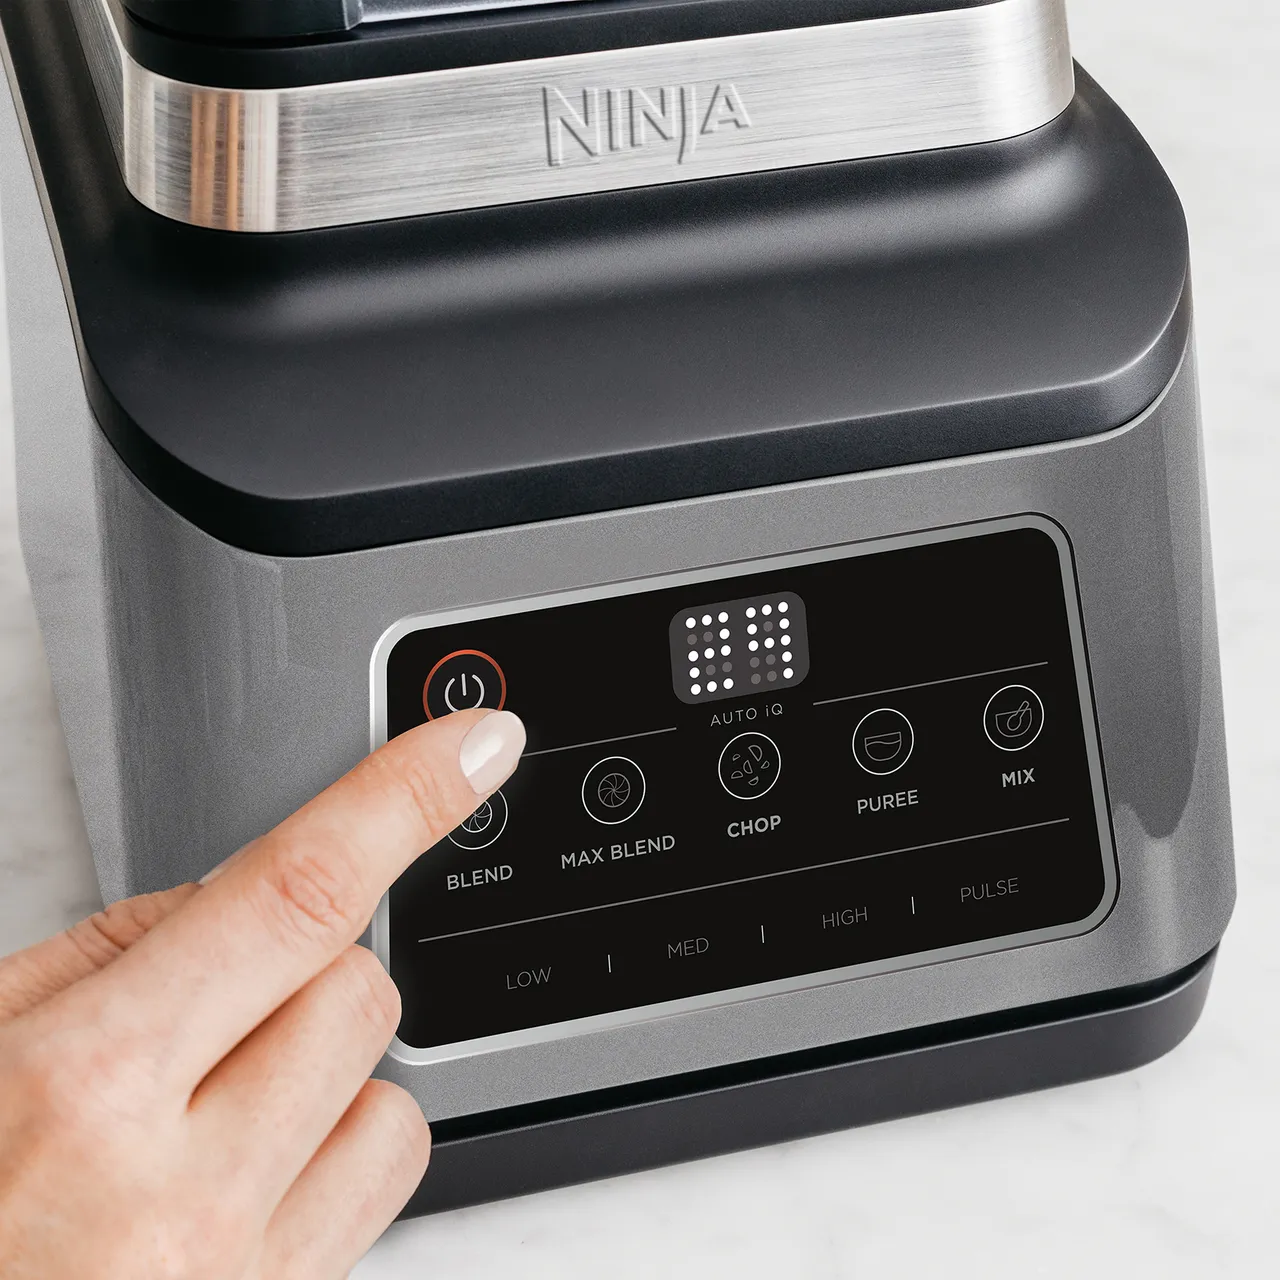 Ninja 3-in-1 Food Processor with Auto-IQ